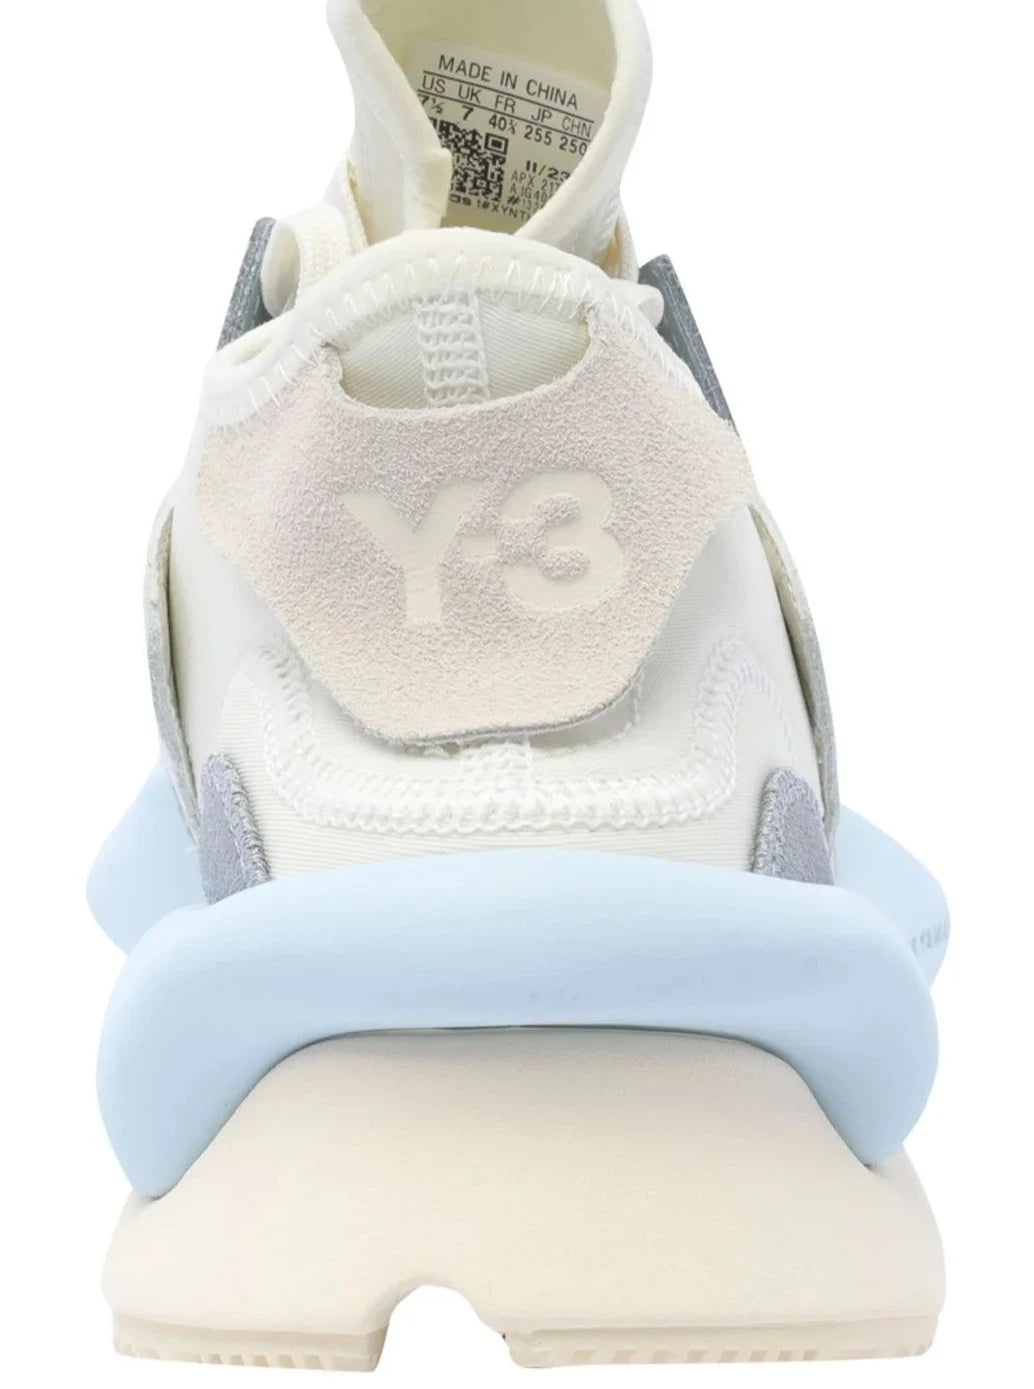 Y-3 'Kaiwa' Sneaker